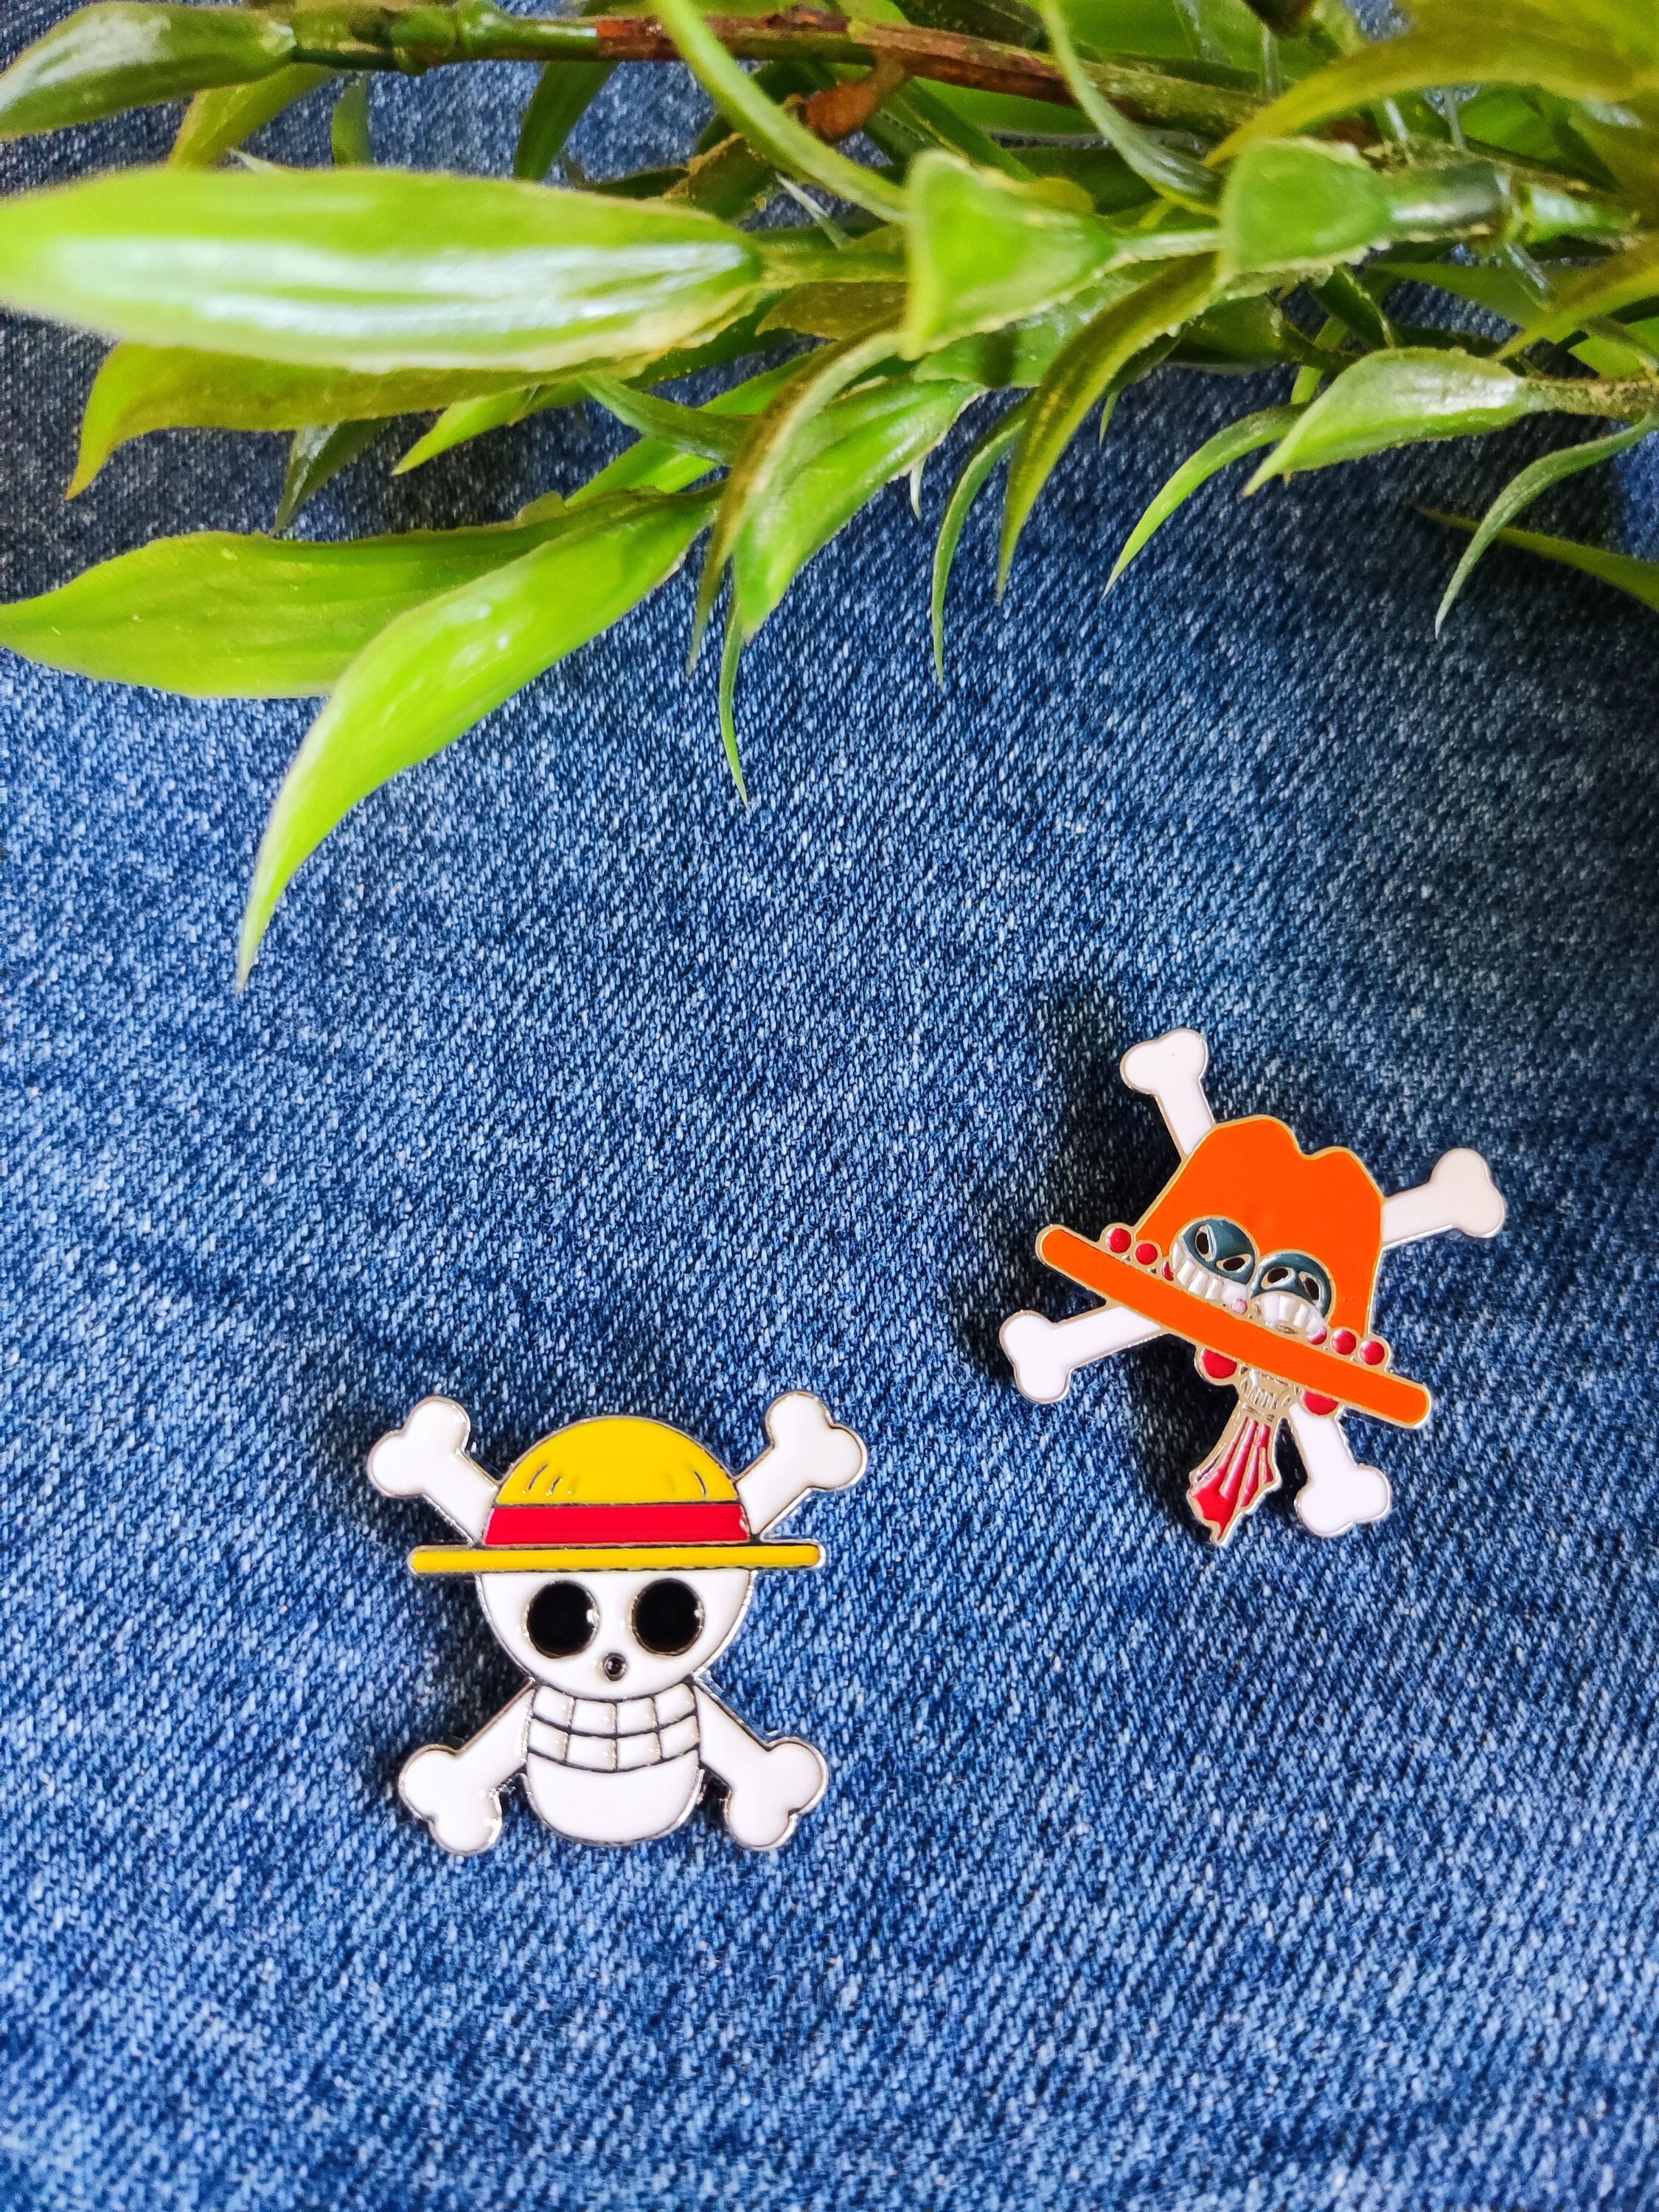 Embroidery design Zoro One Piece - Inspire Uplift